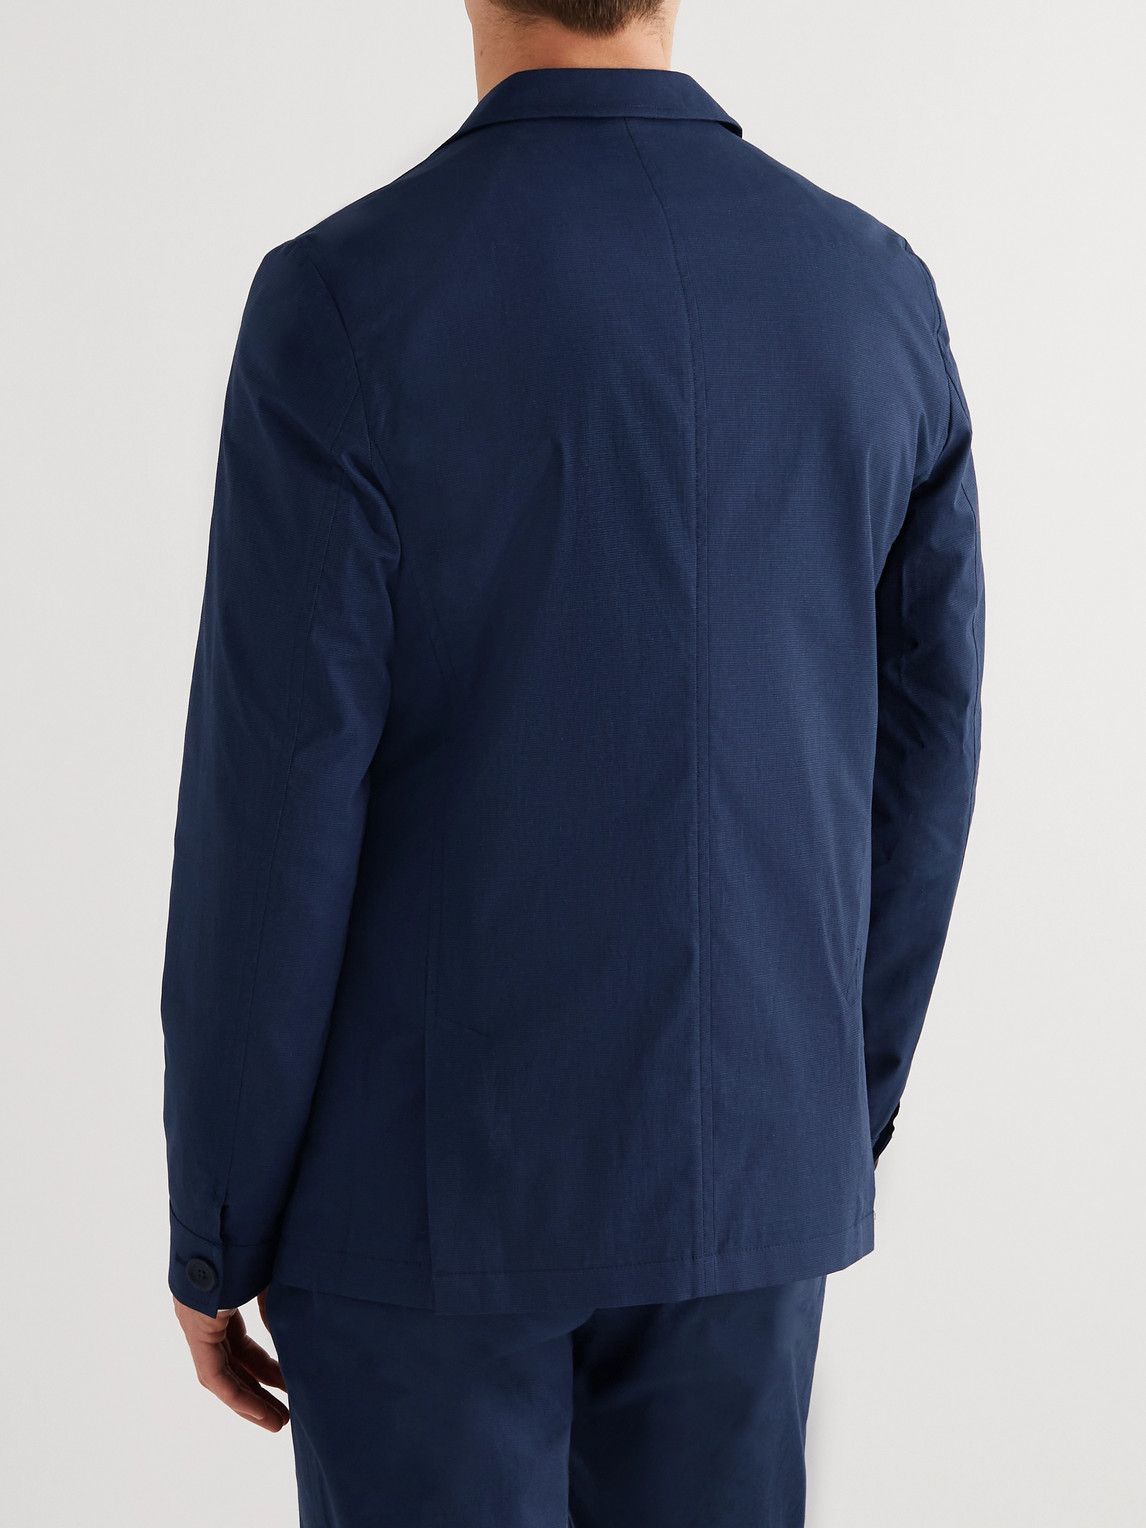 Oliver Spencer - Fairway Unstructured Cotton-Blend Suit Jacket - Blue